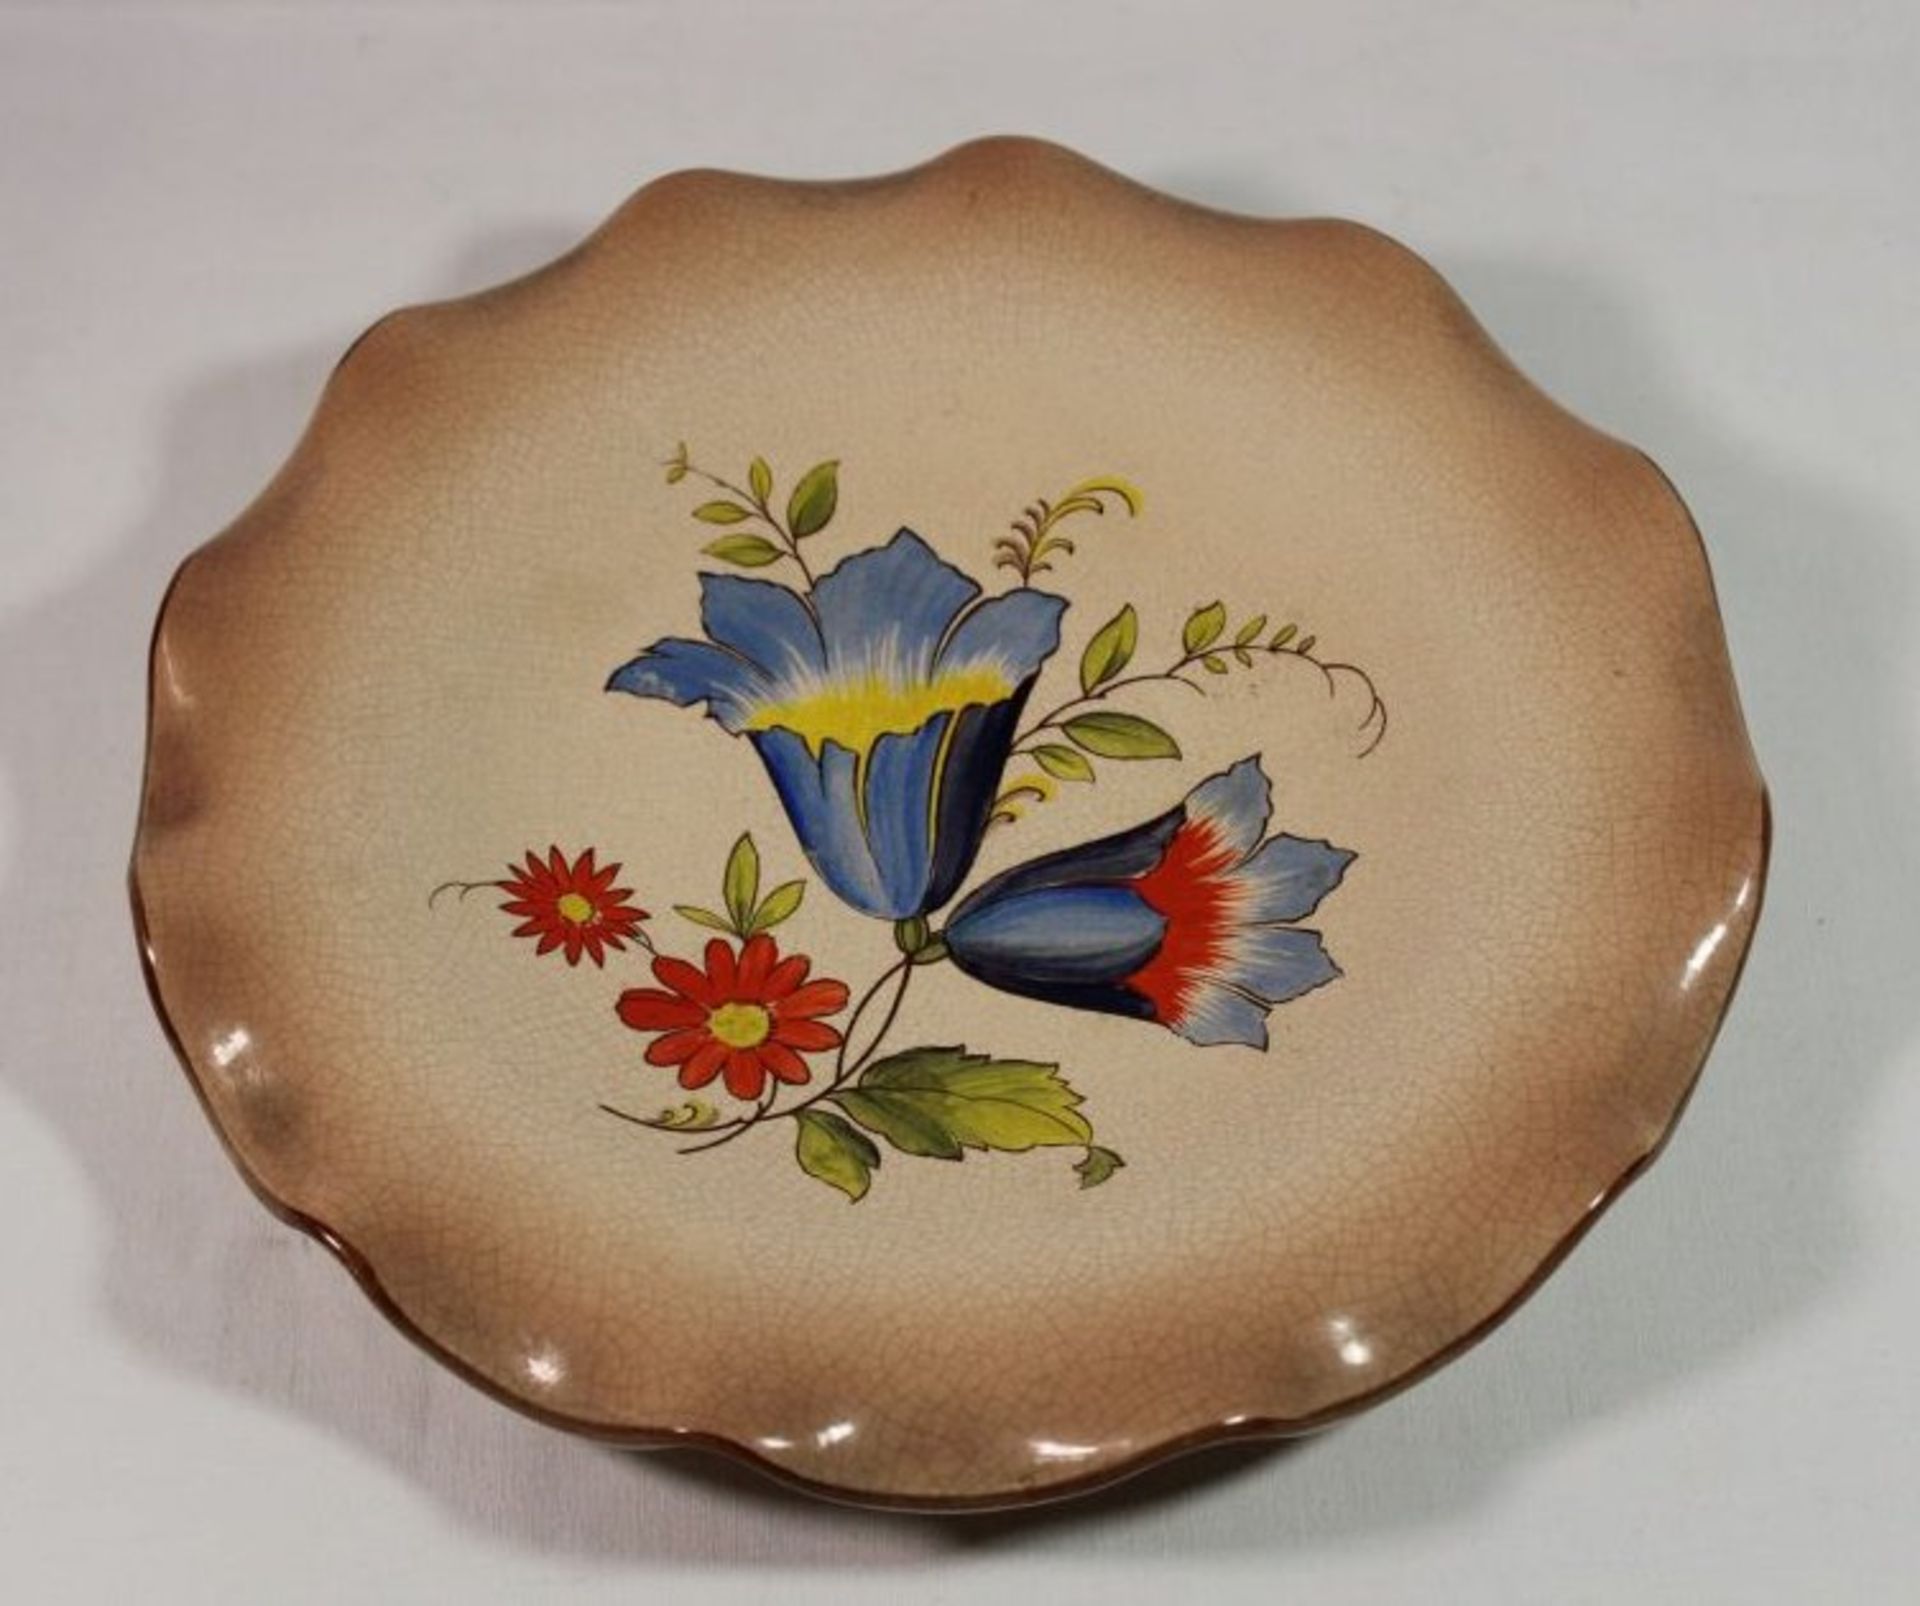 Obstaschel mit floralem Dekor, Rosenthal Keramik, D-29cm.